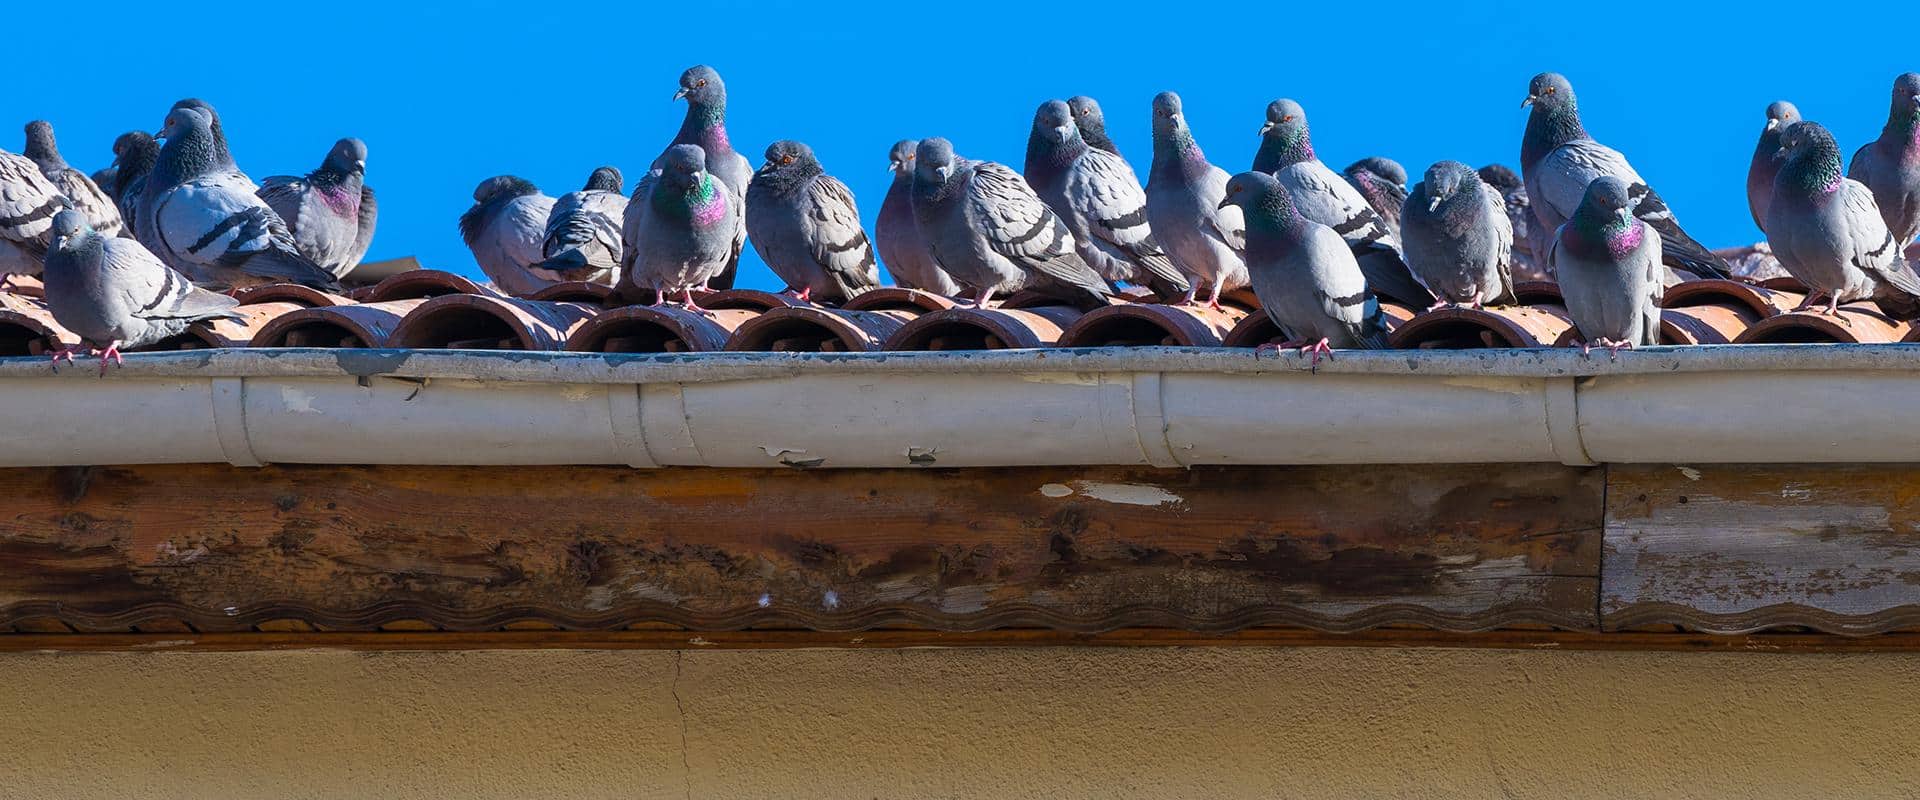 pigeons on roof in kittitas county wa